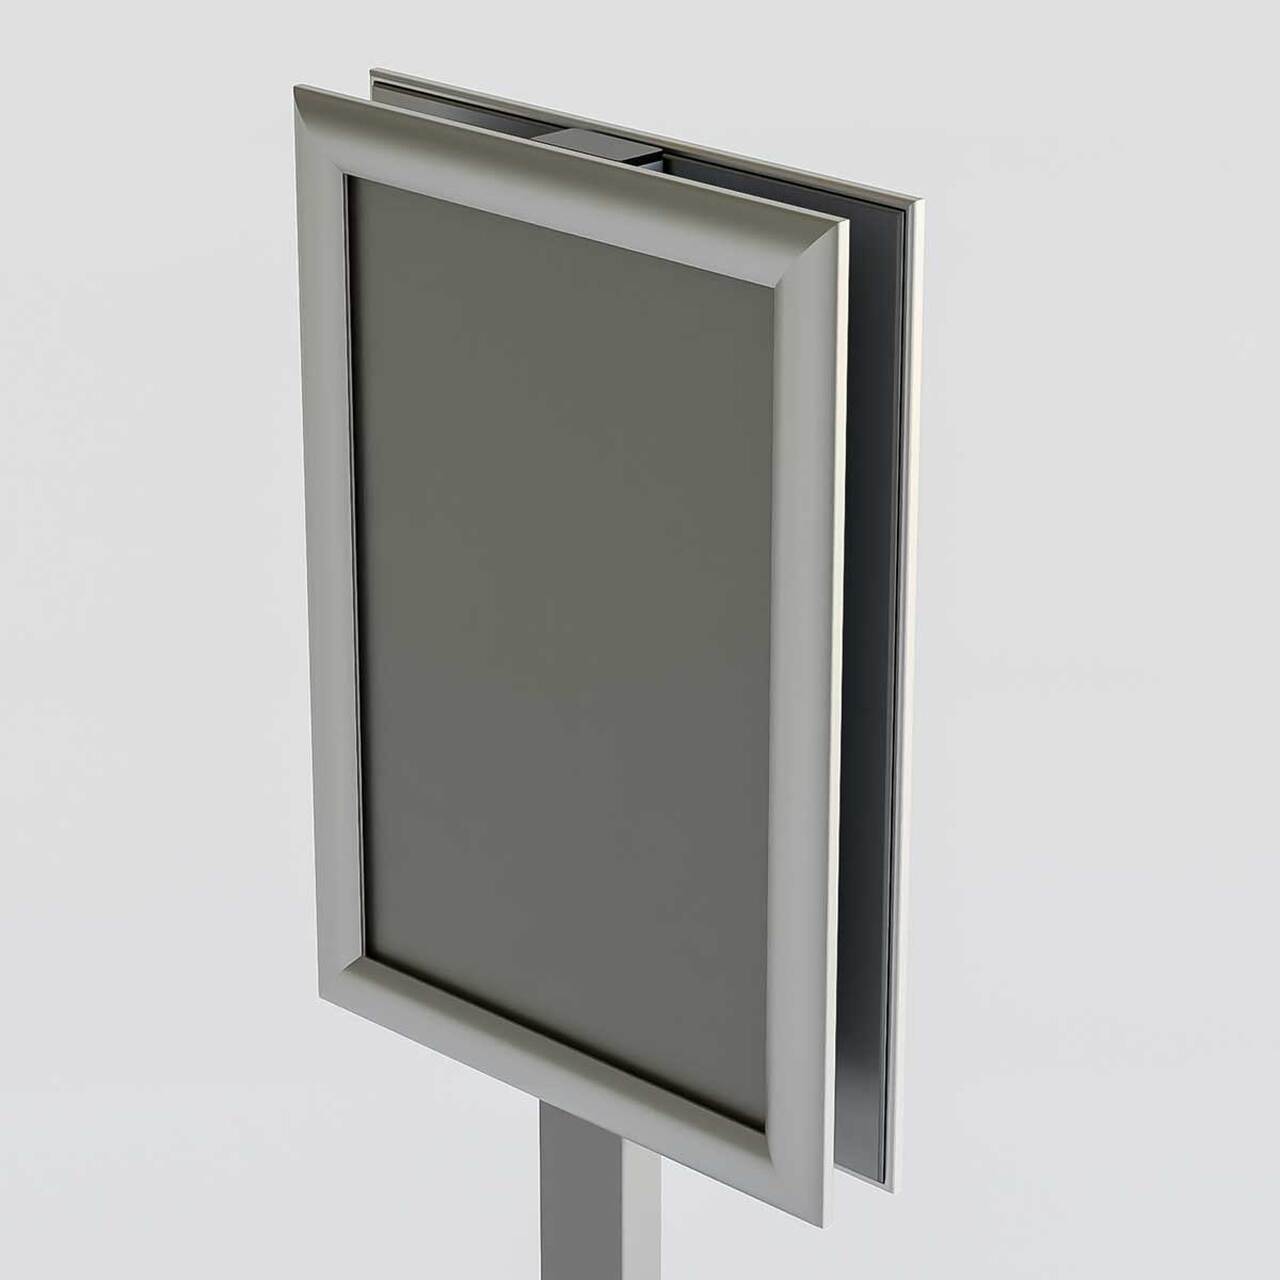 Panou Informativ Clasic cu profil rectangular, JJ DISPLAYS, format A4 (210x297mm) Dublă Față, expunere portret.